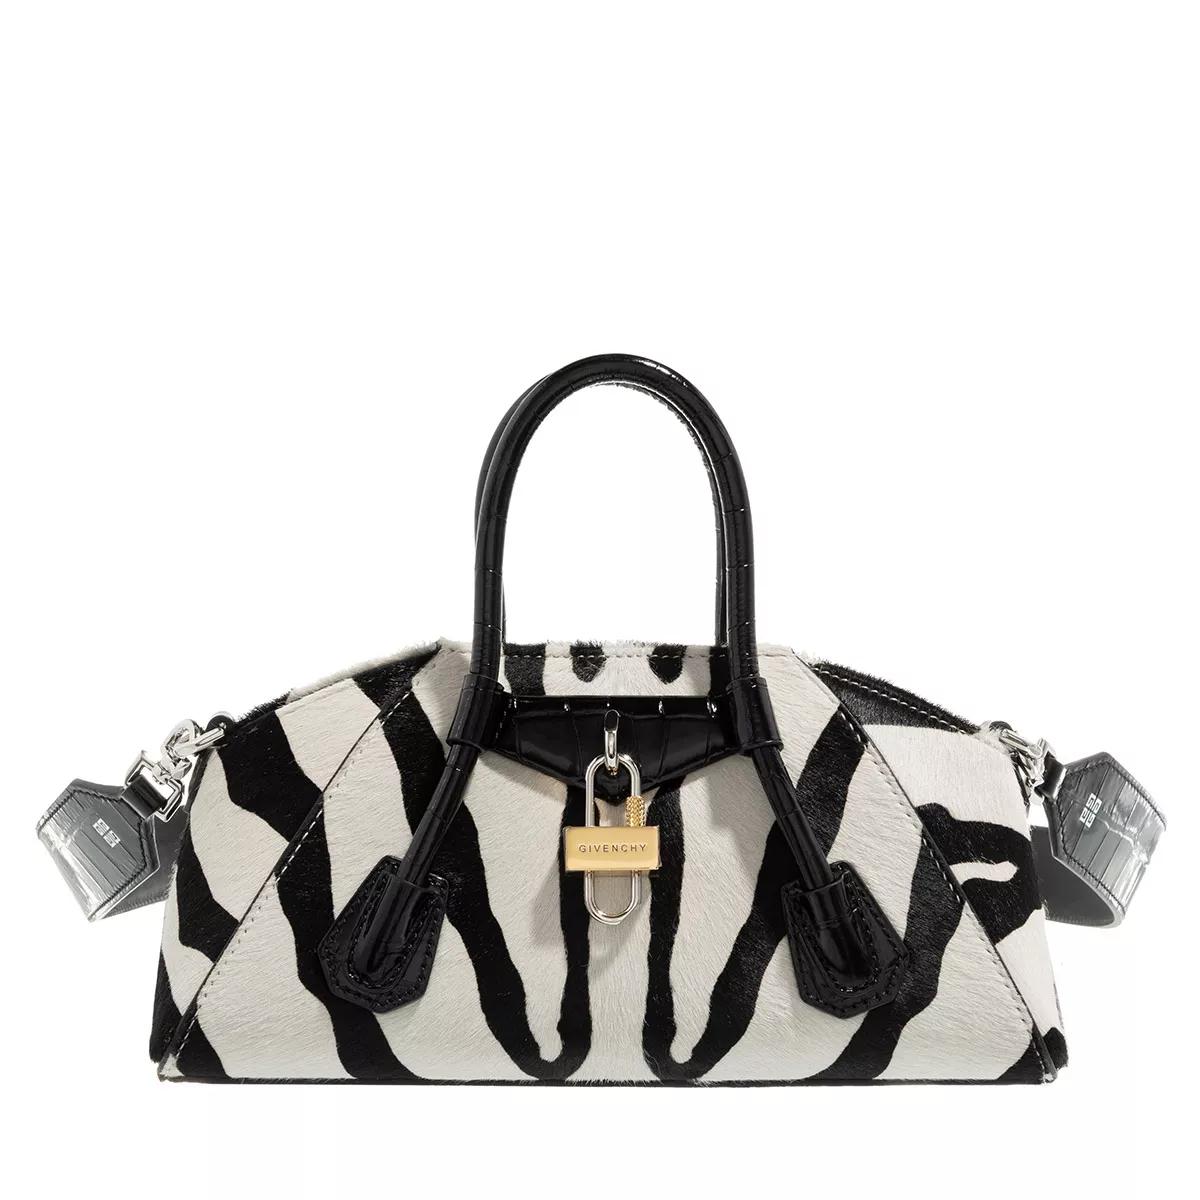 The new Antigona Soft bag from Givenchy - Numéro Netherlands